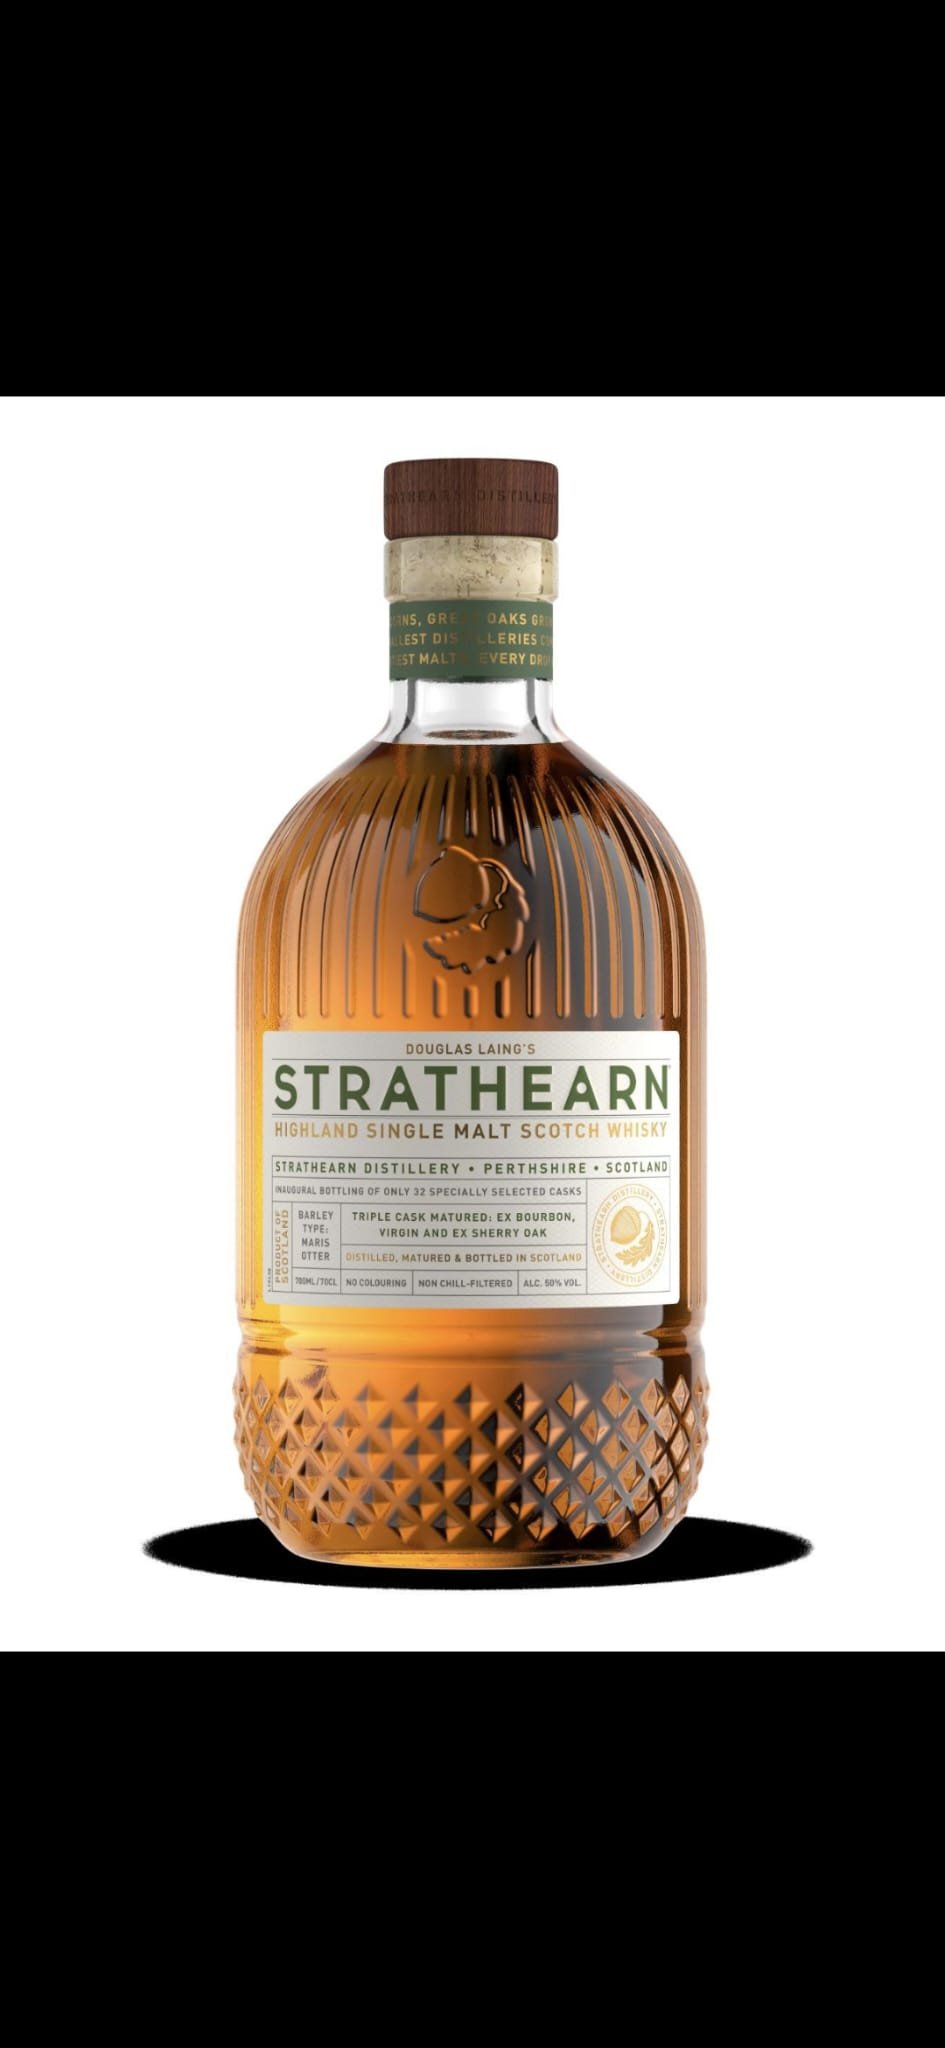 Strathearn Highland Single Malt